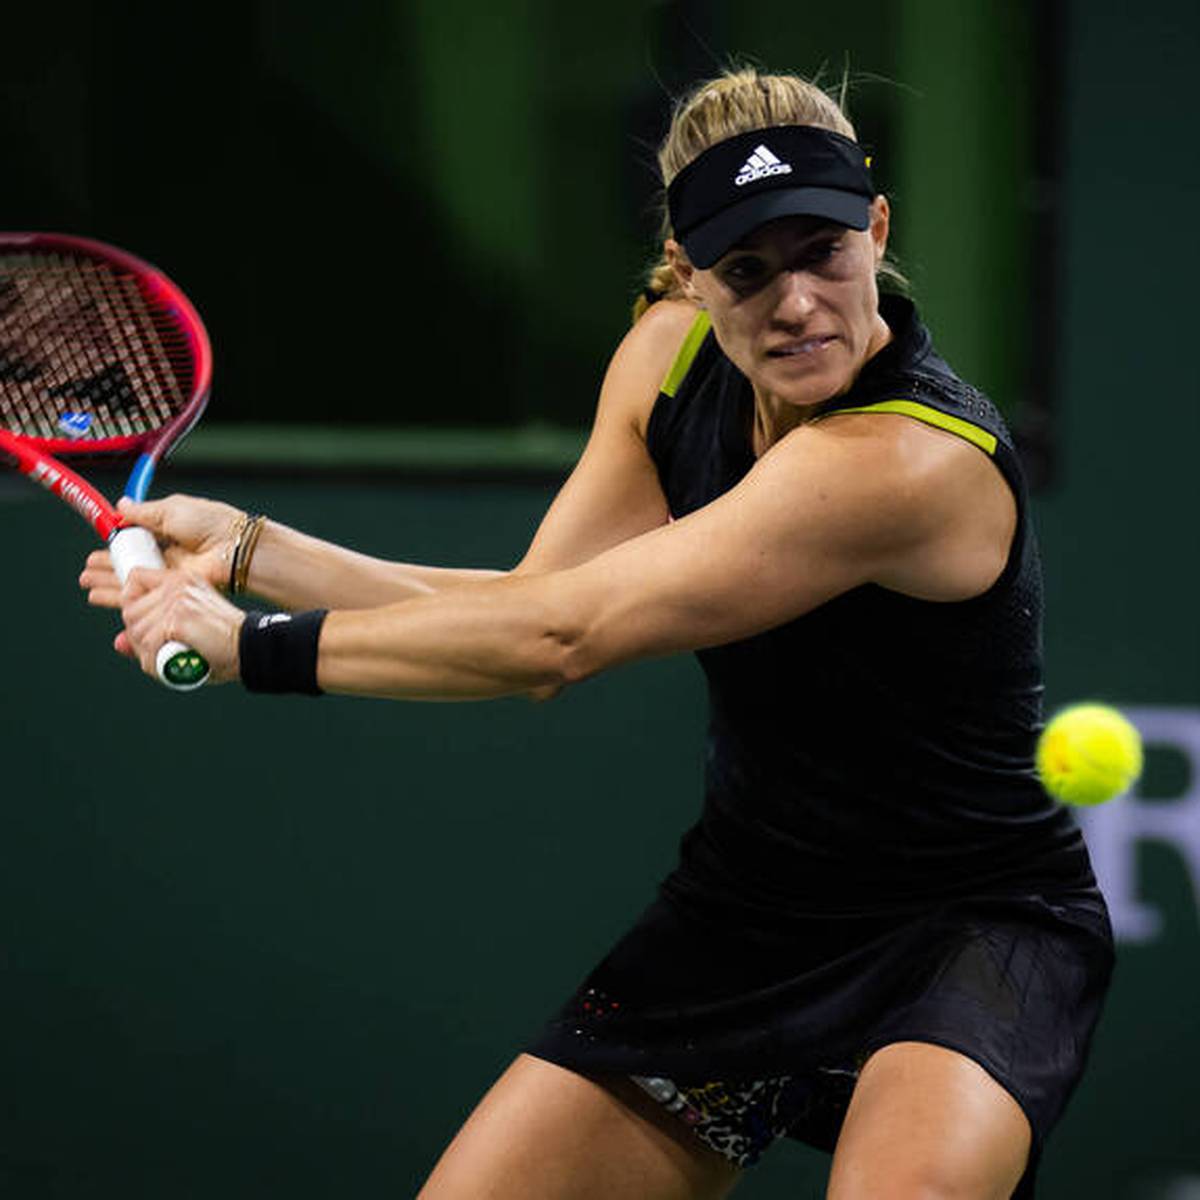 WTA-Turnier in Indian Wells Kerber unterliegt Iga Swiatek im Achtelfinale nach Krimi